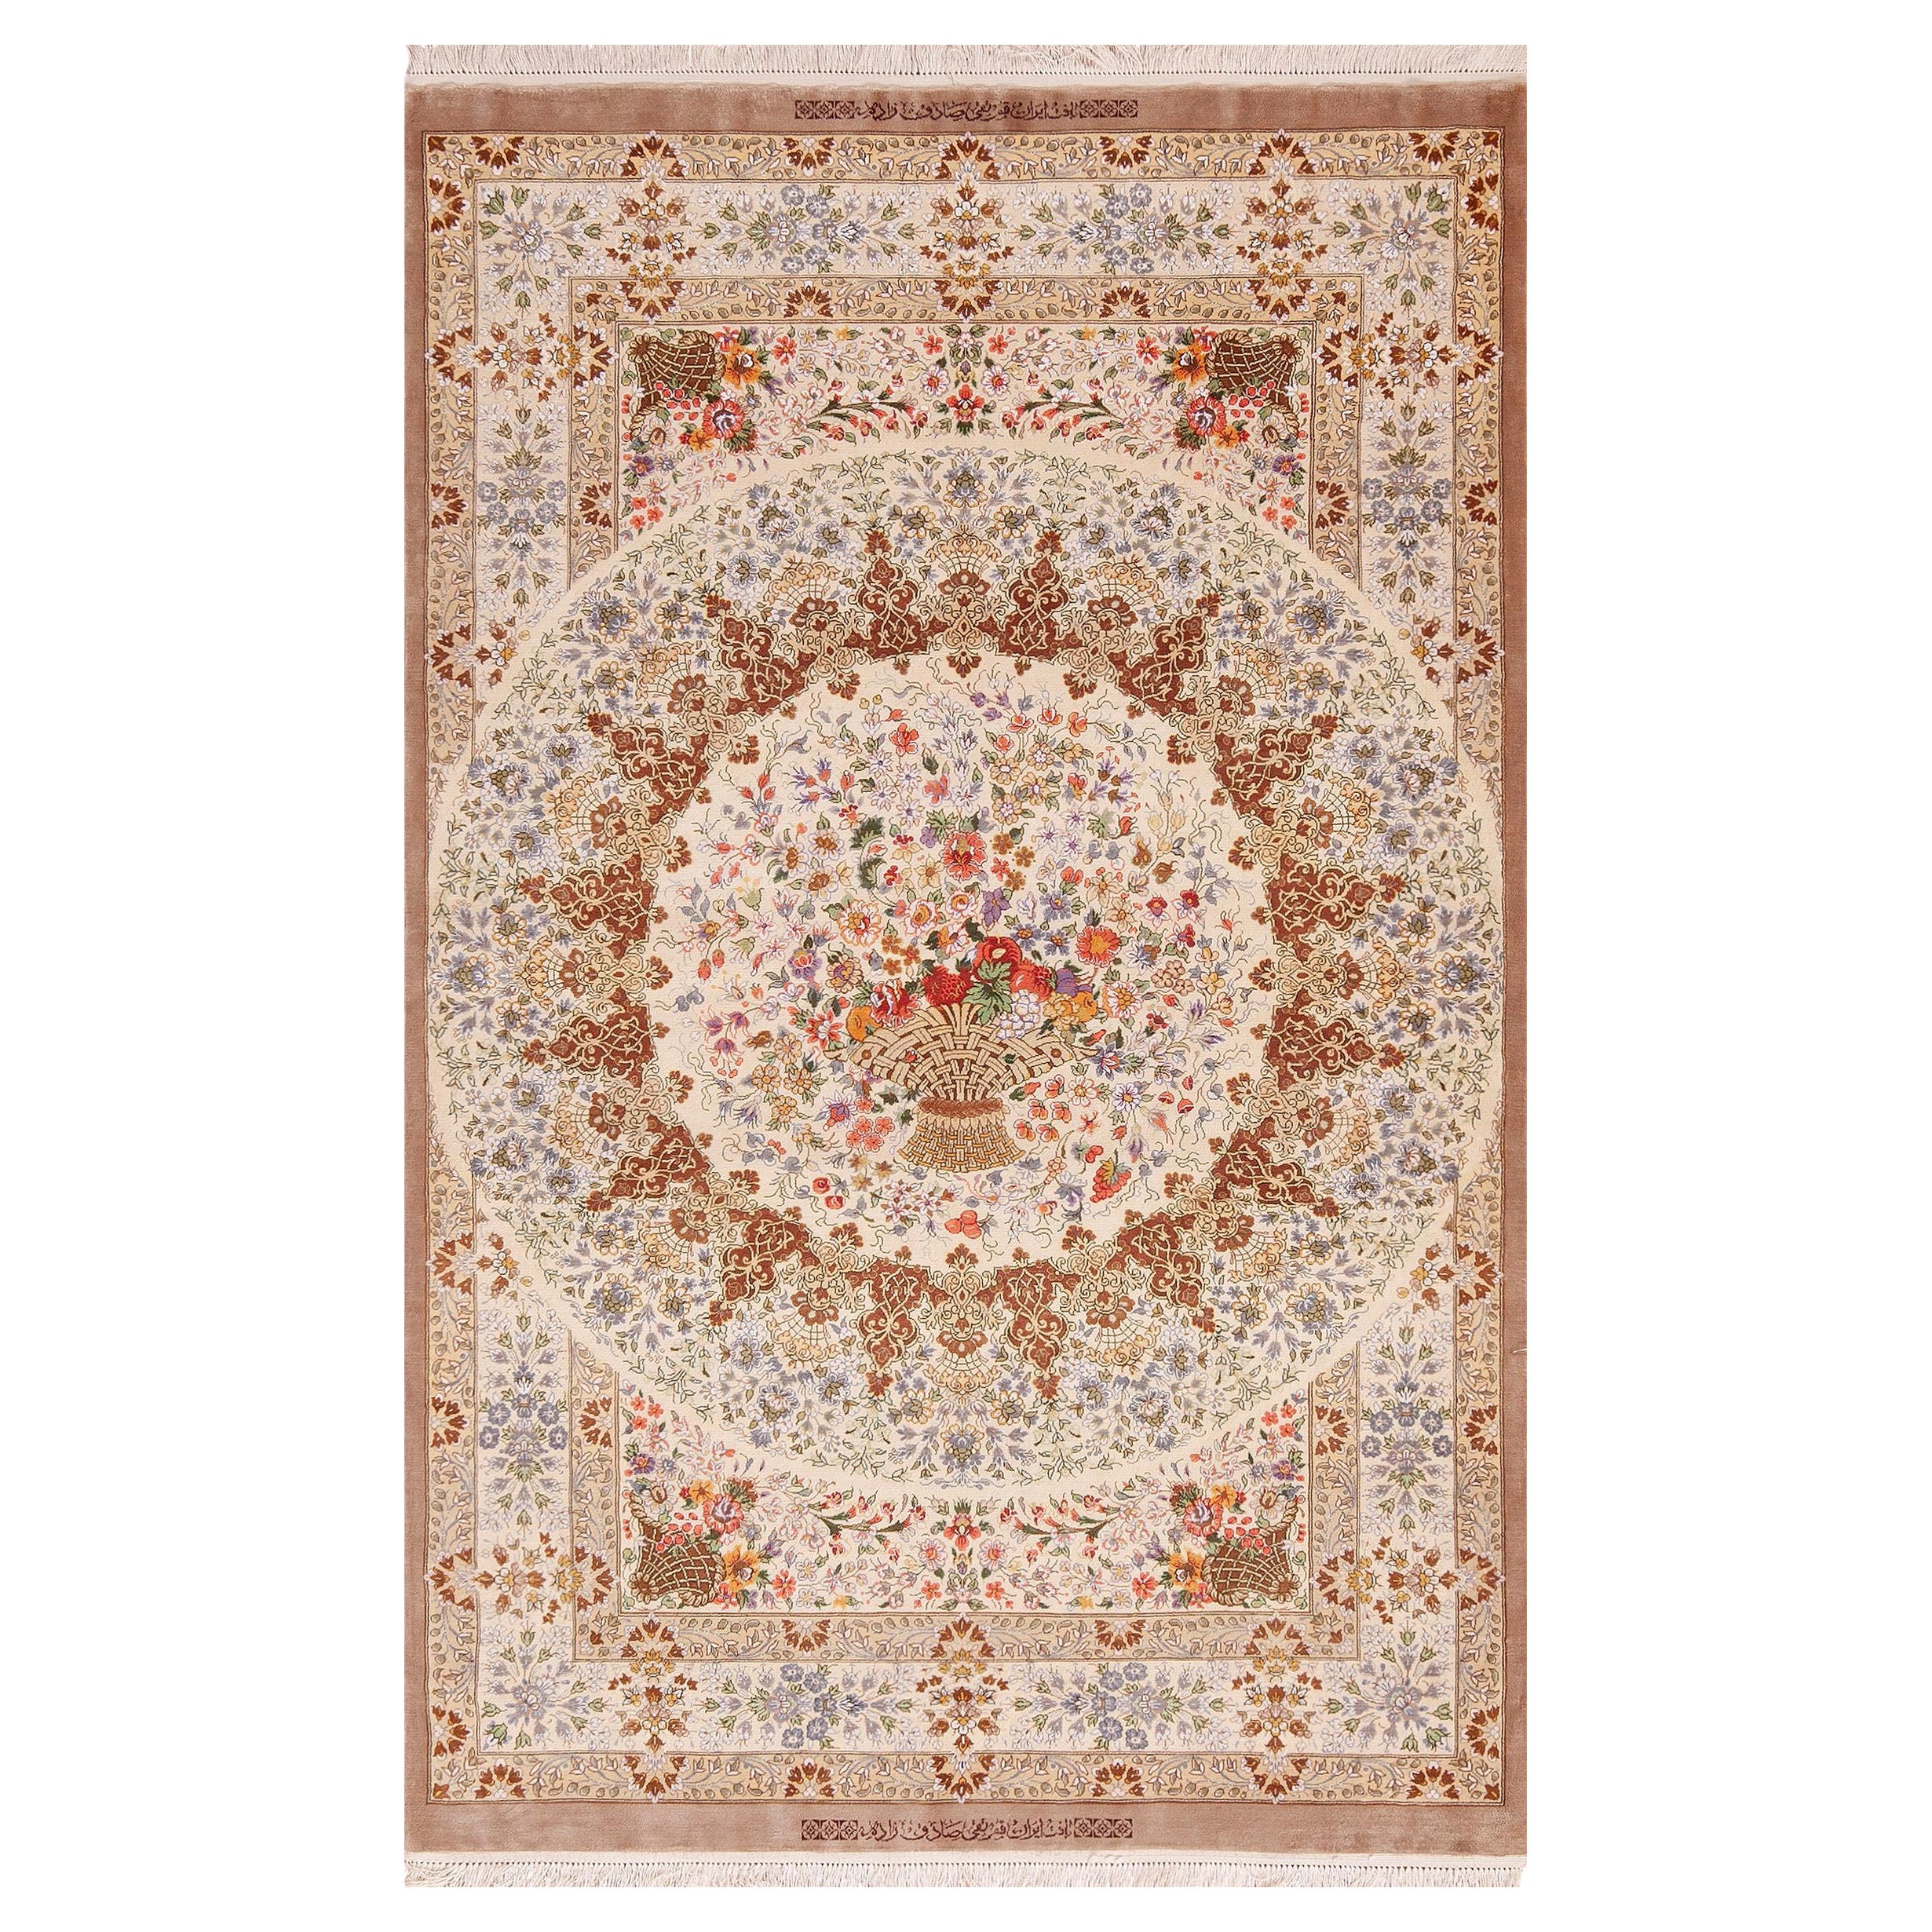 Luxurious Fine Weave Artistic Floral Vintage Persian Silk Qum Rug 3'5" x 5'4" For Sale